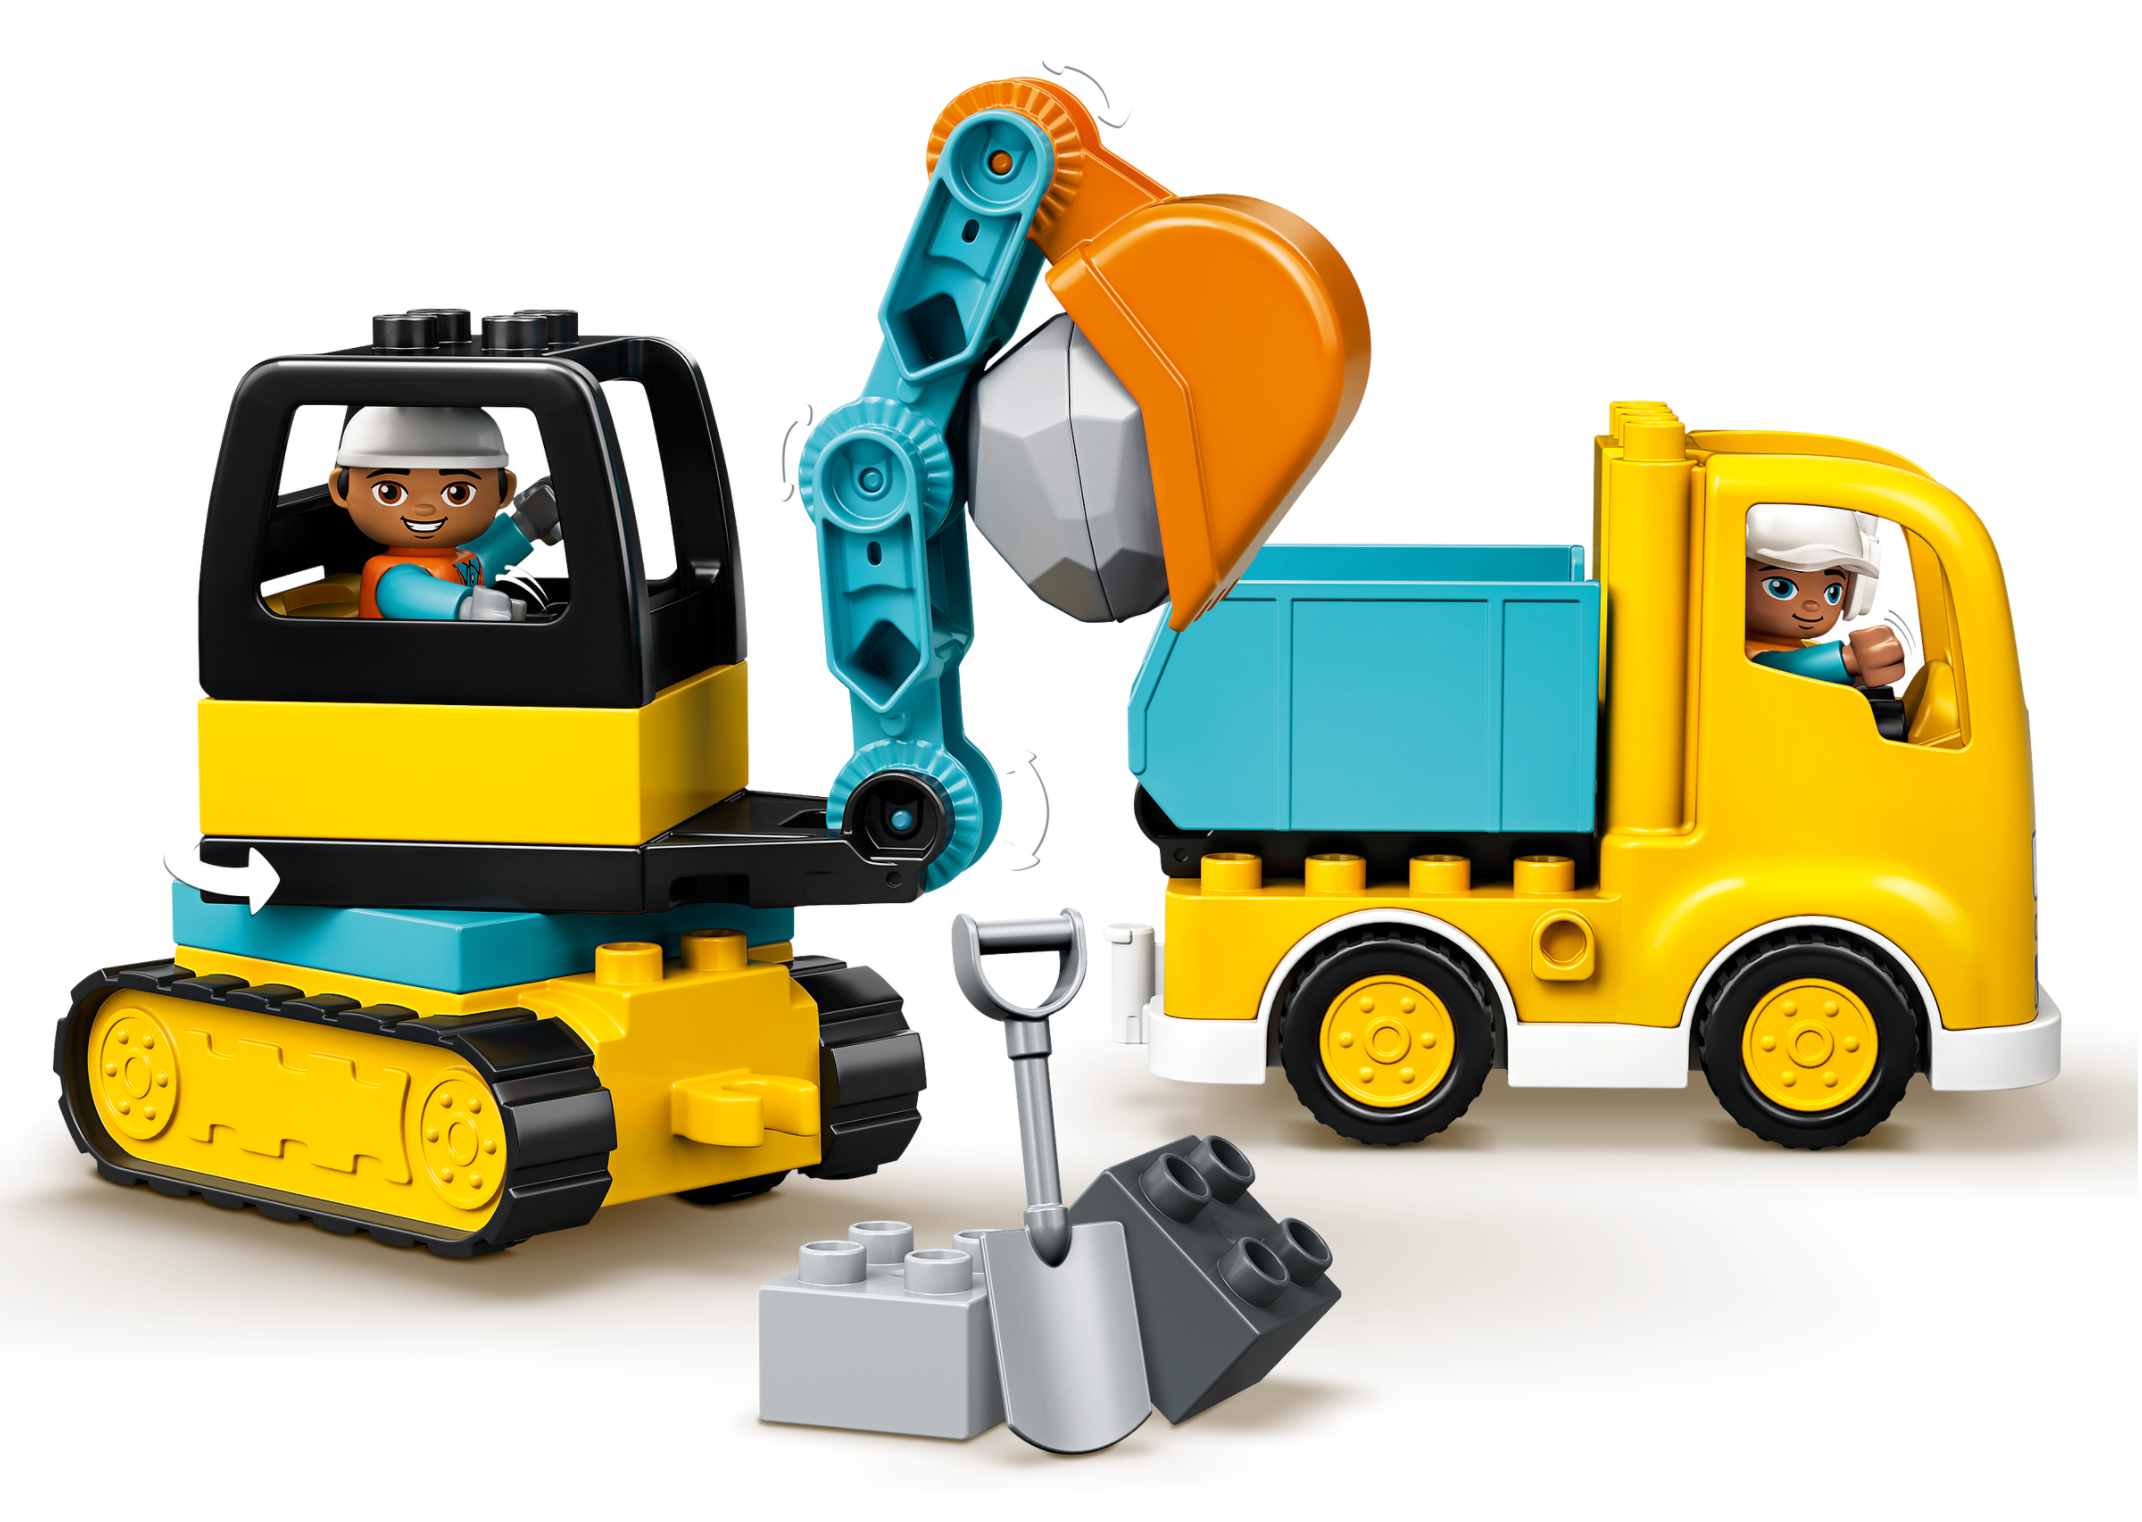 LEGO: DUPLO - Truck & Tracked Excavator